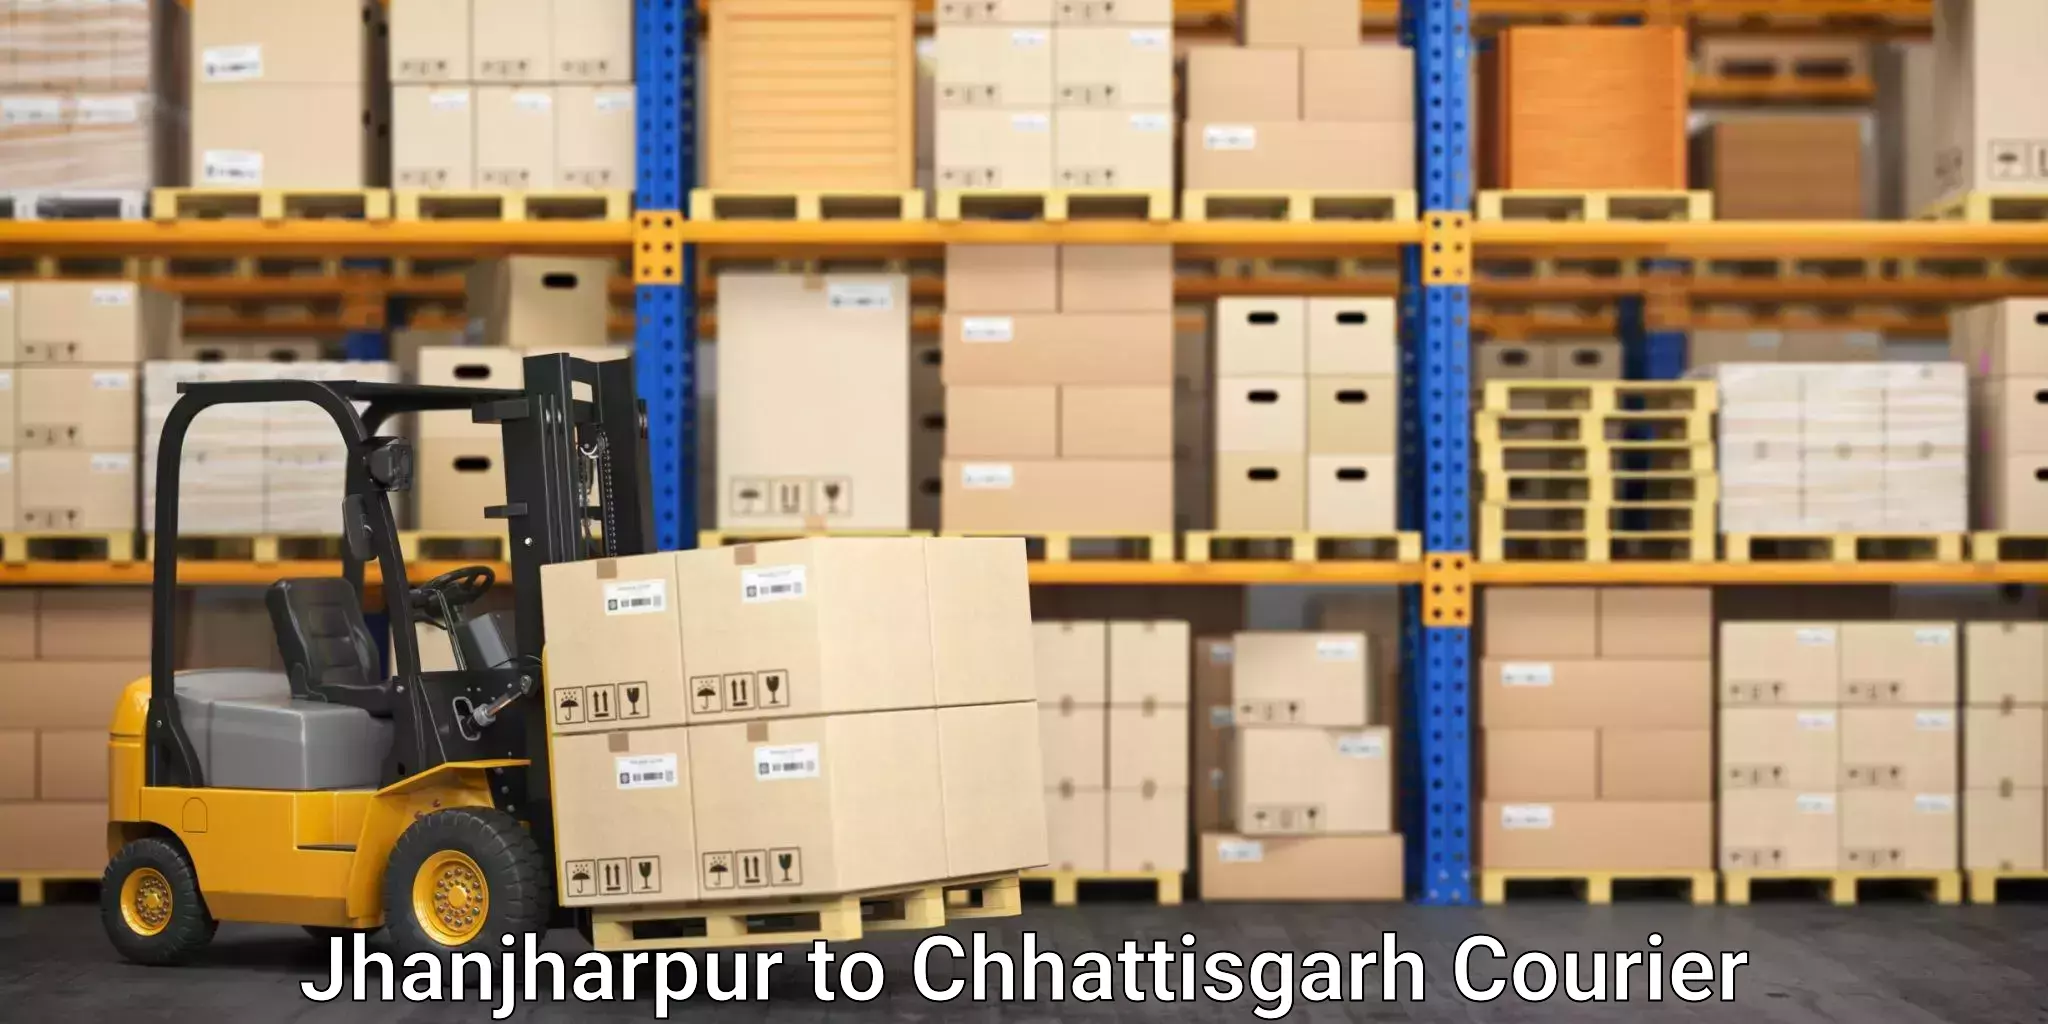 Professional moving company Jhanjharpur to Kawardha